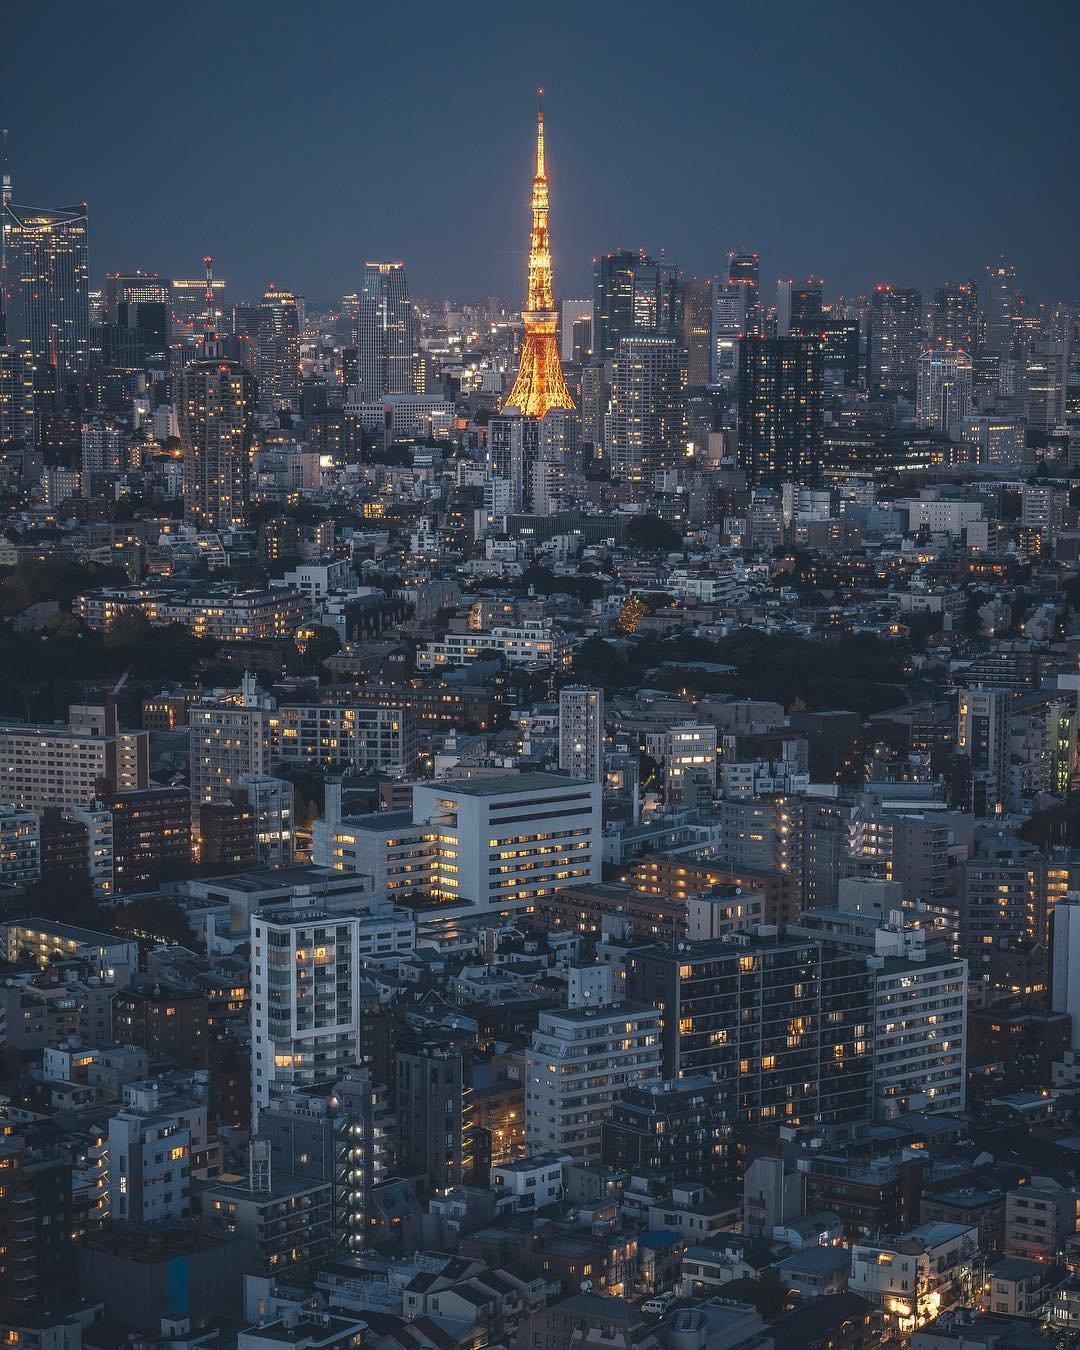 Улицы Токио на снимках от RK